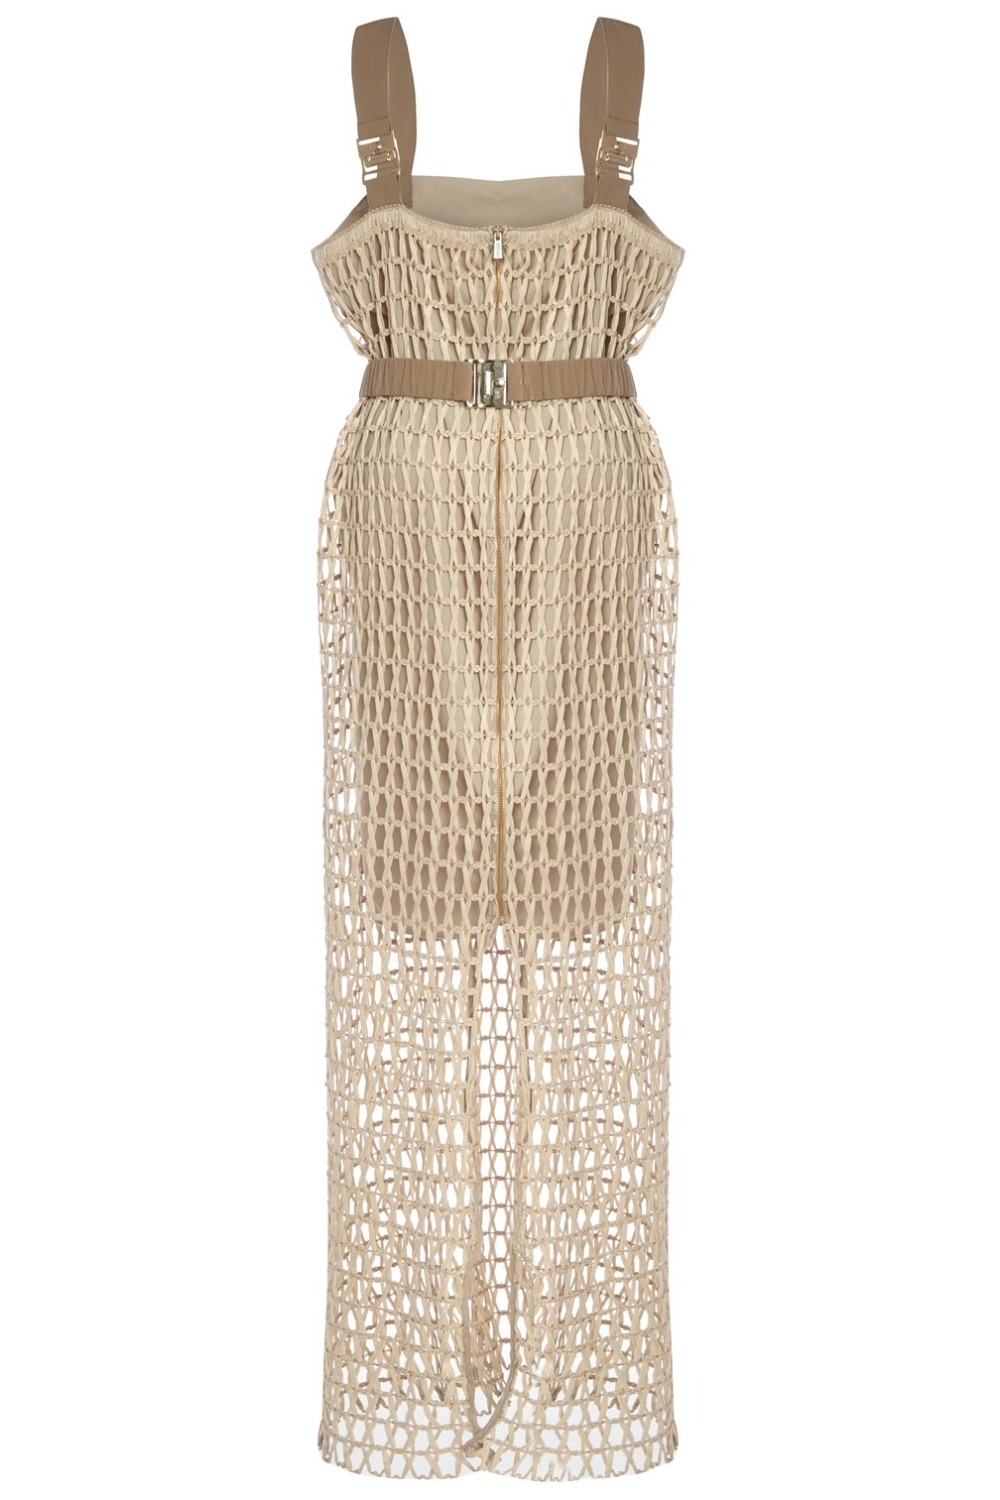 Macrame Knit Filet Dress, Zipped Front, Lined